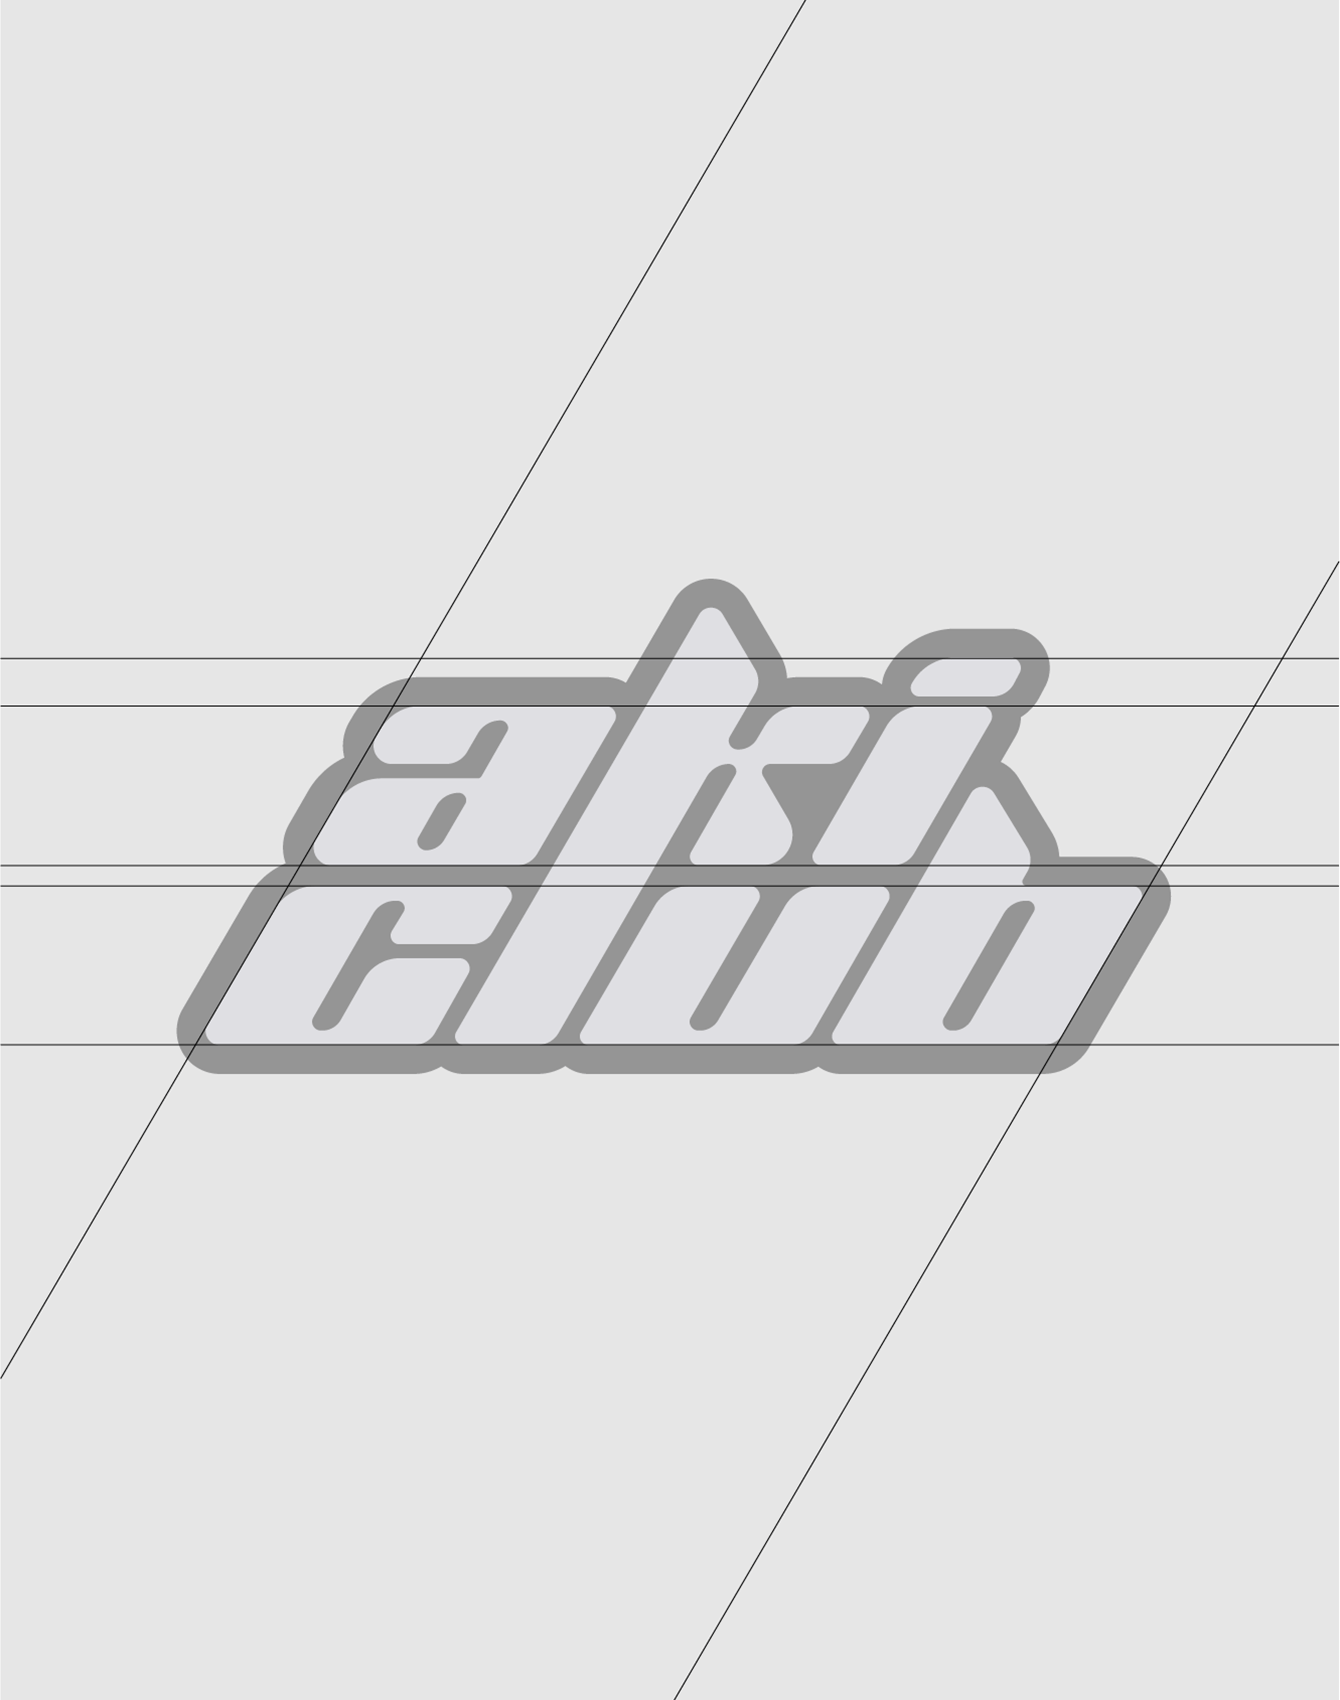 Akiclub logo construction